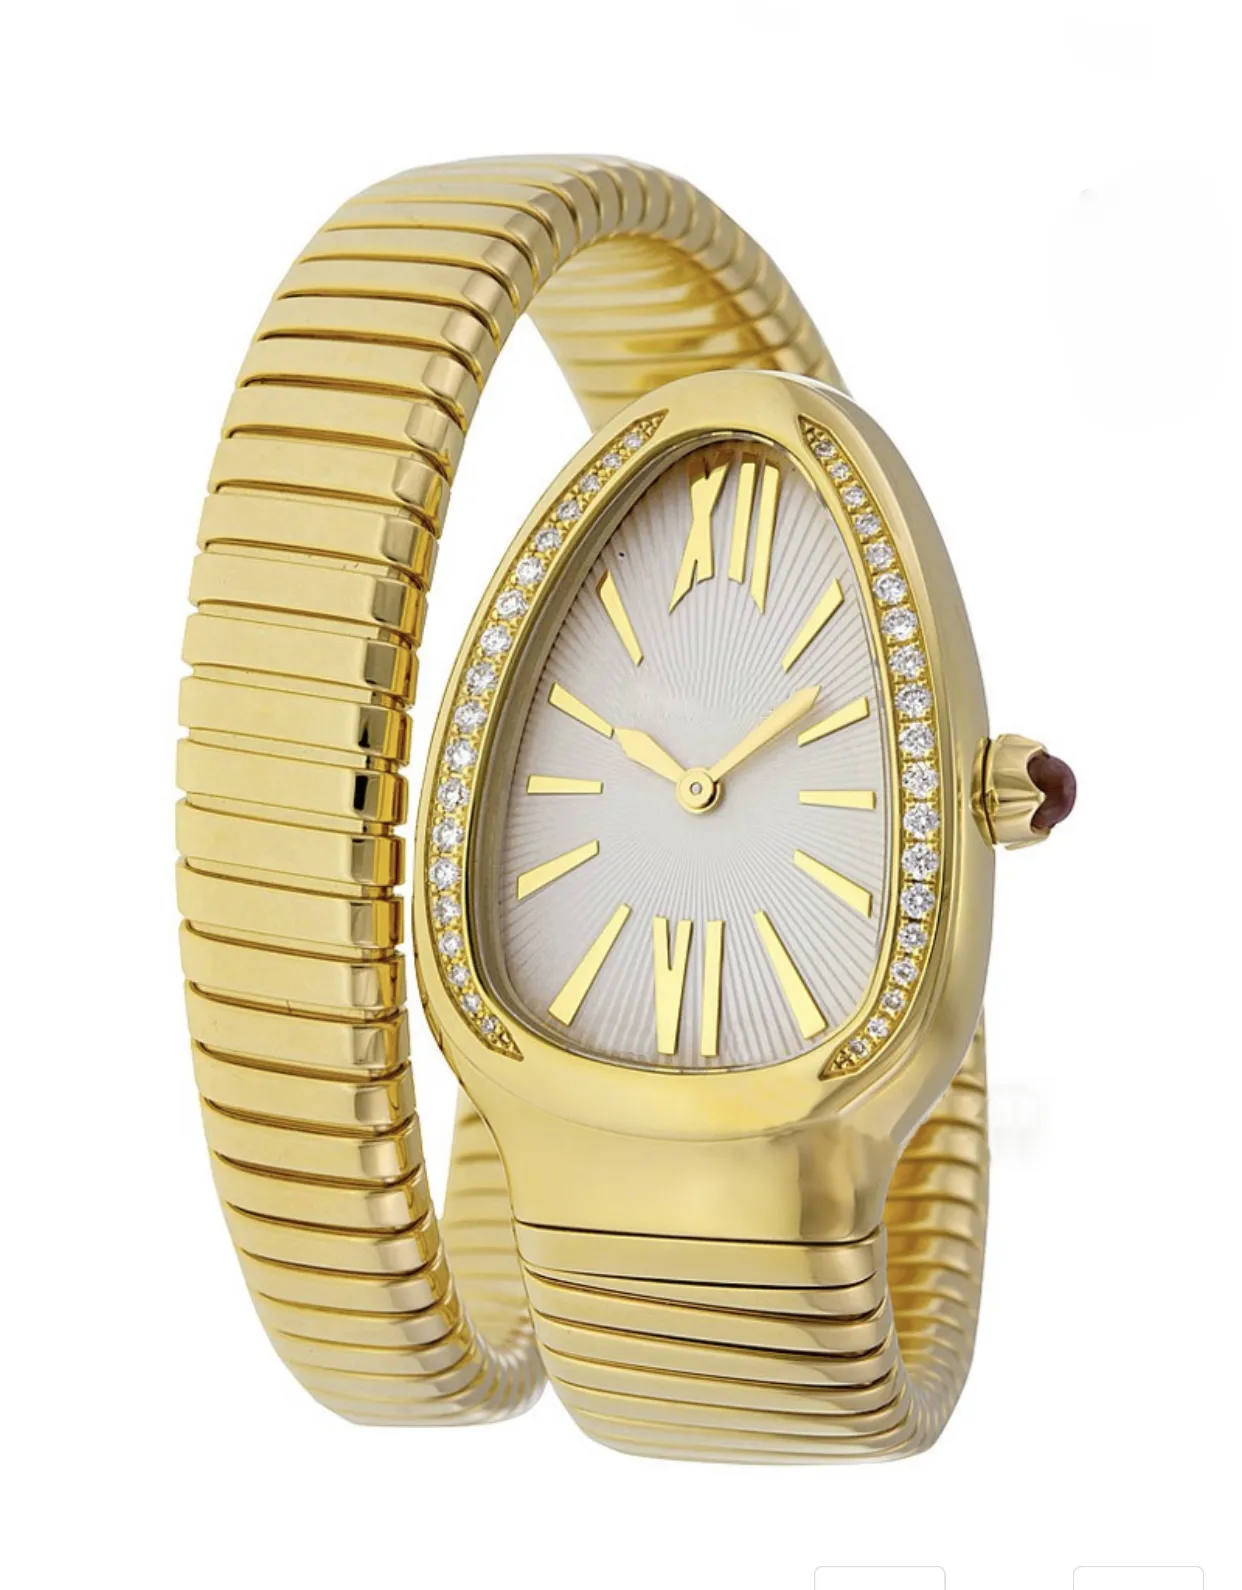 Frauen Uhr, 32 mm, Edelstahl, doppelte Wundschlangenform, importierte Quarzbewegung, Frühlingsgurt, Diamond Uhrenring